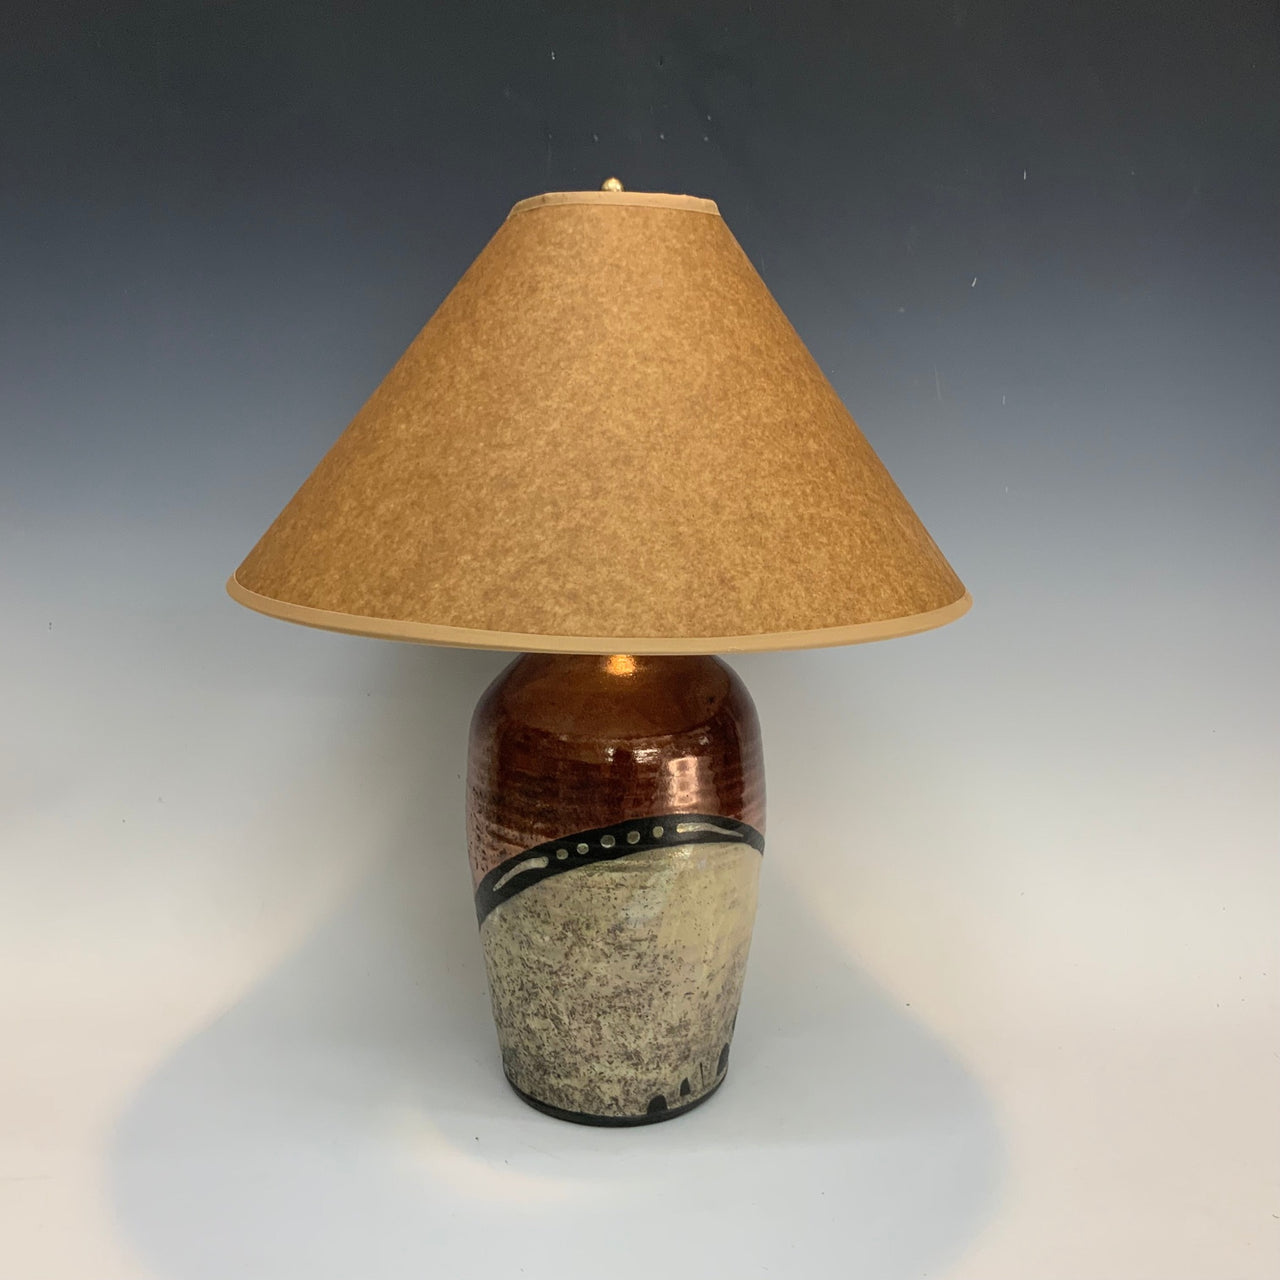 Small Raku lamp in copper and gold